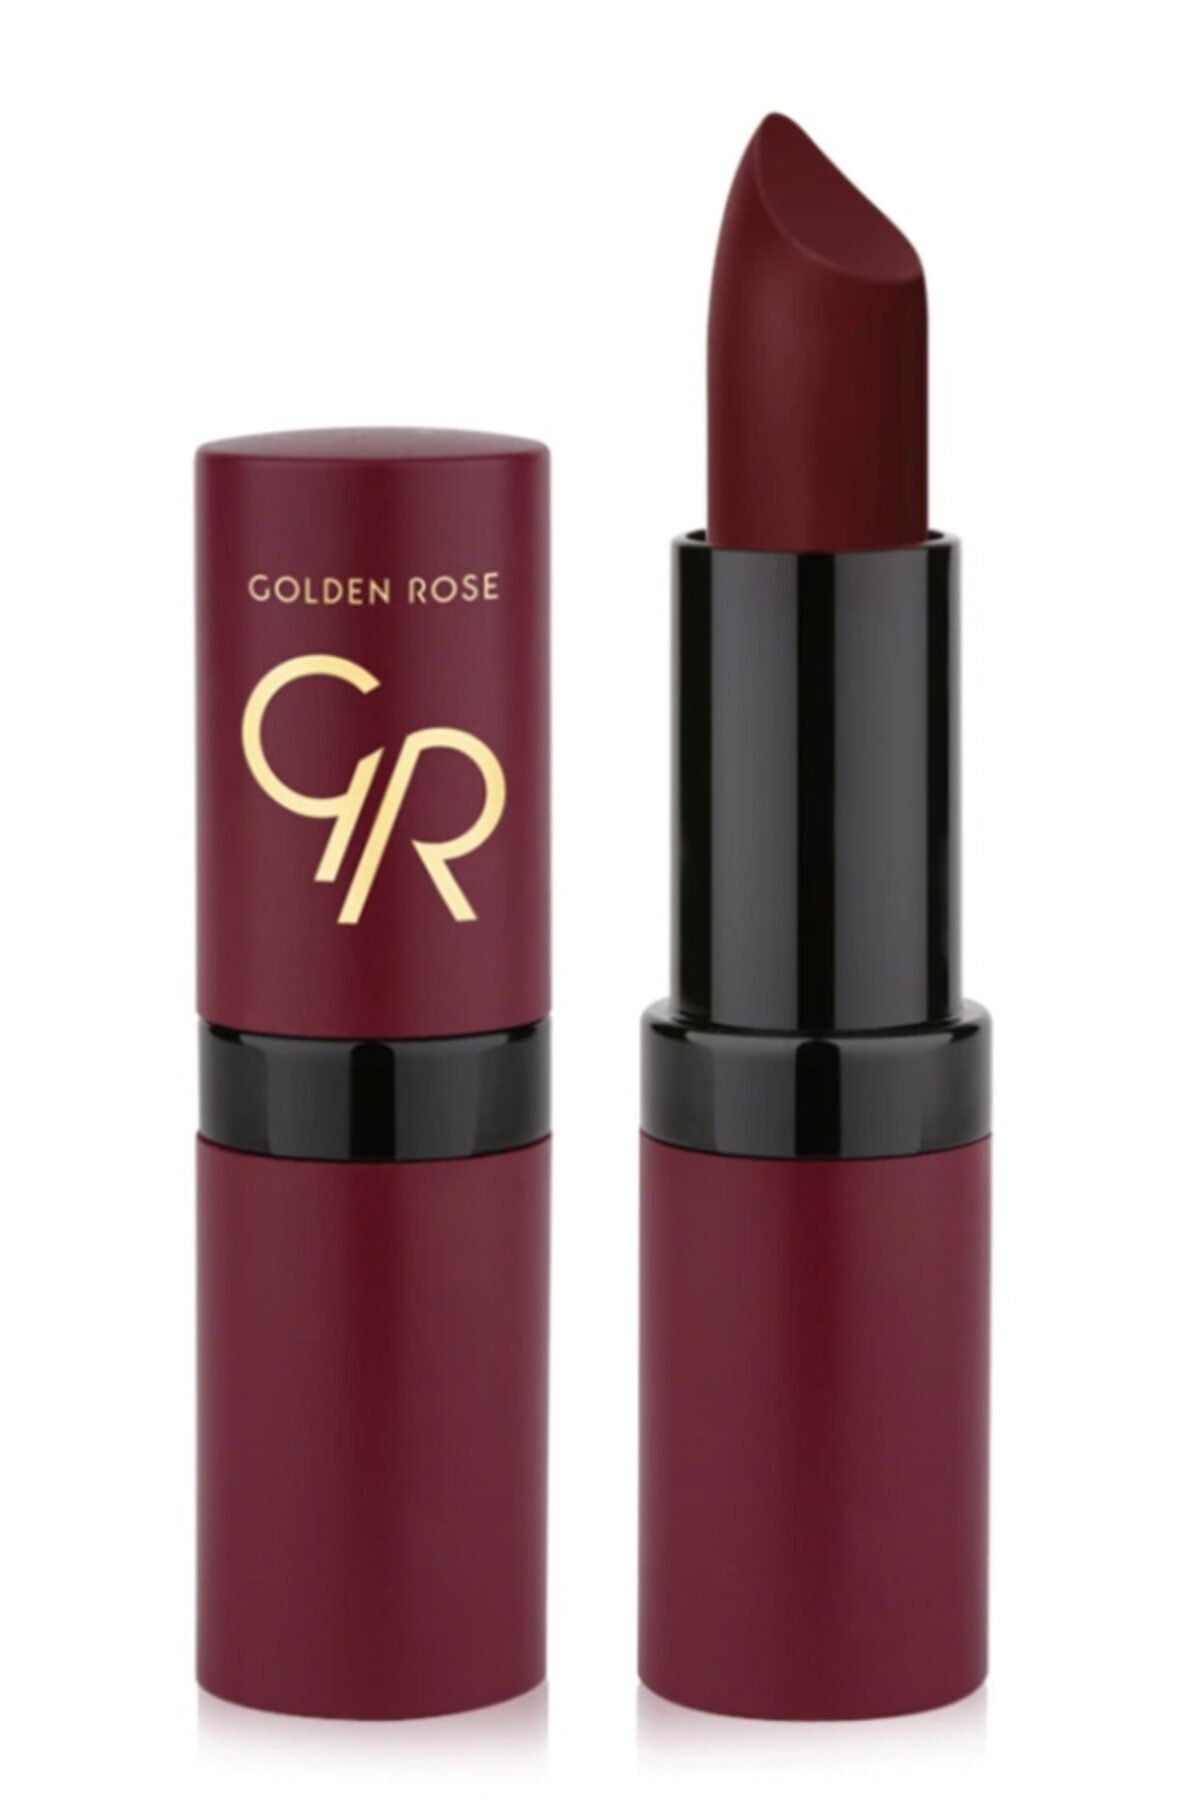 Golden Rose Velvet Matte Lipstick Ruj No 23 Fiyati Yorumlari Trendyol